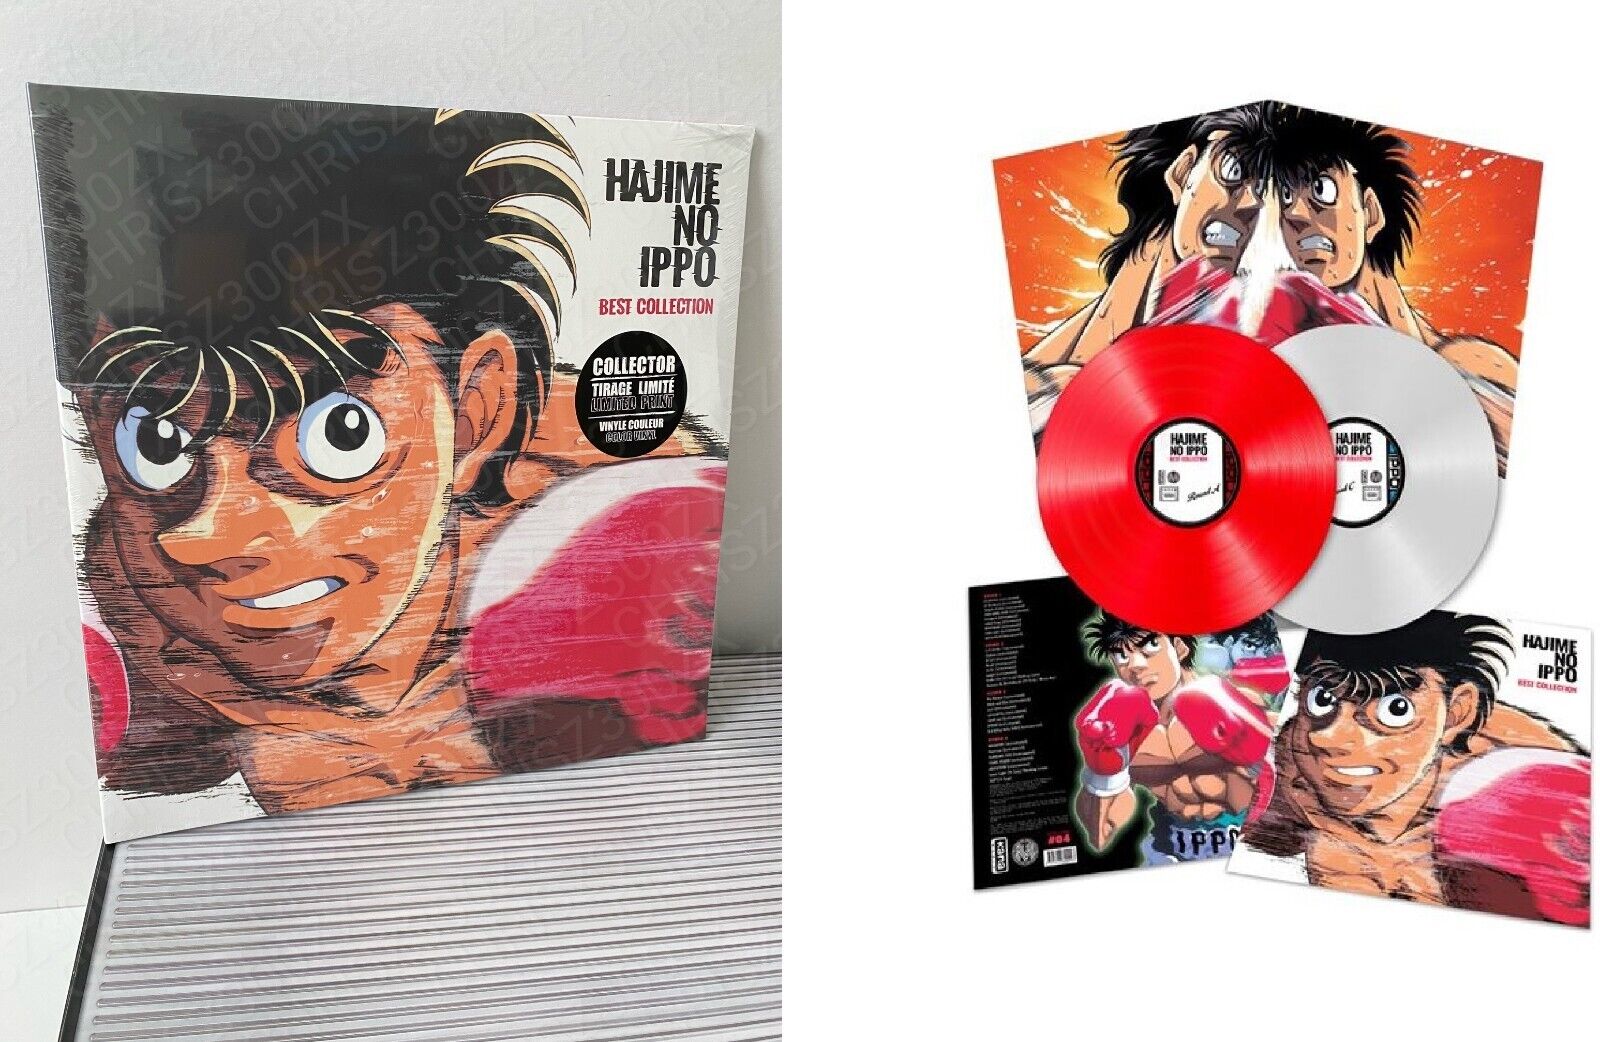 HAJIME NO IPPO Best Collection Vinyl Record Soundtrack 2 LP Manga Anime Boxer